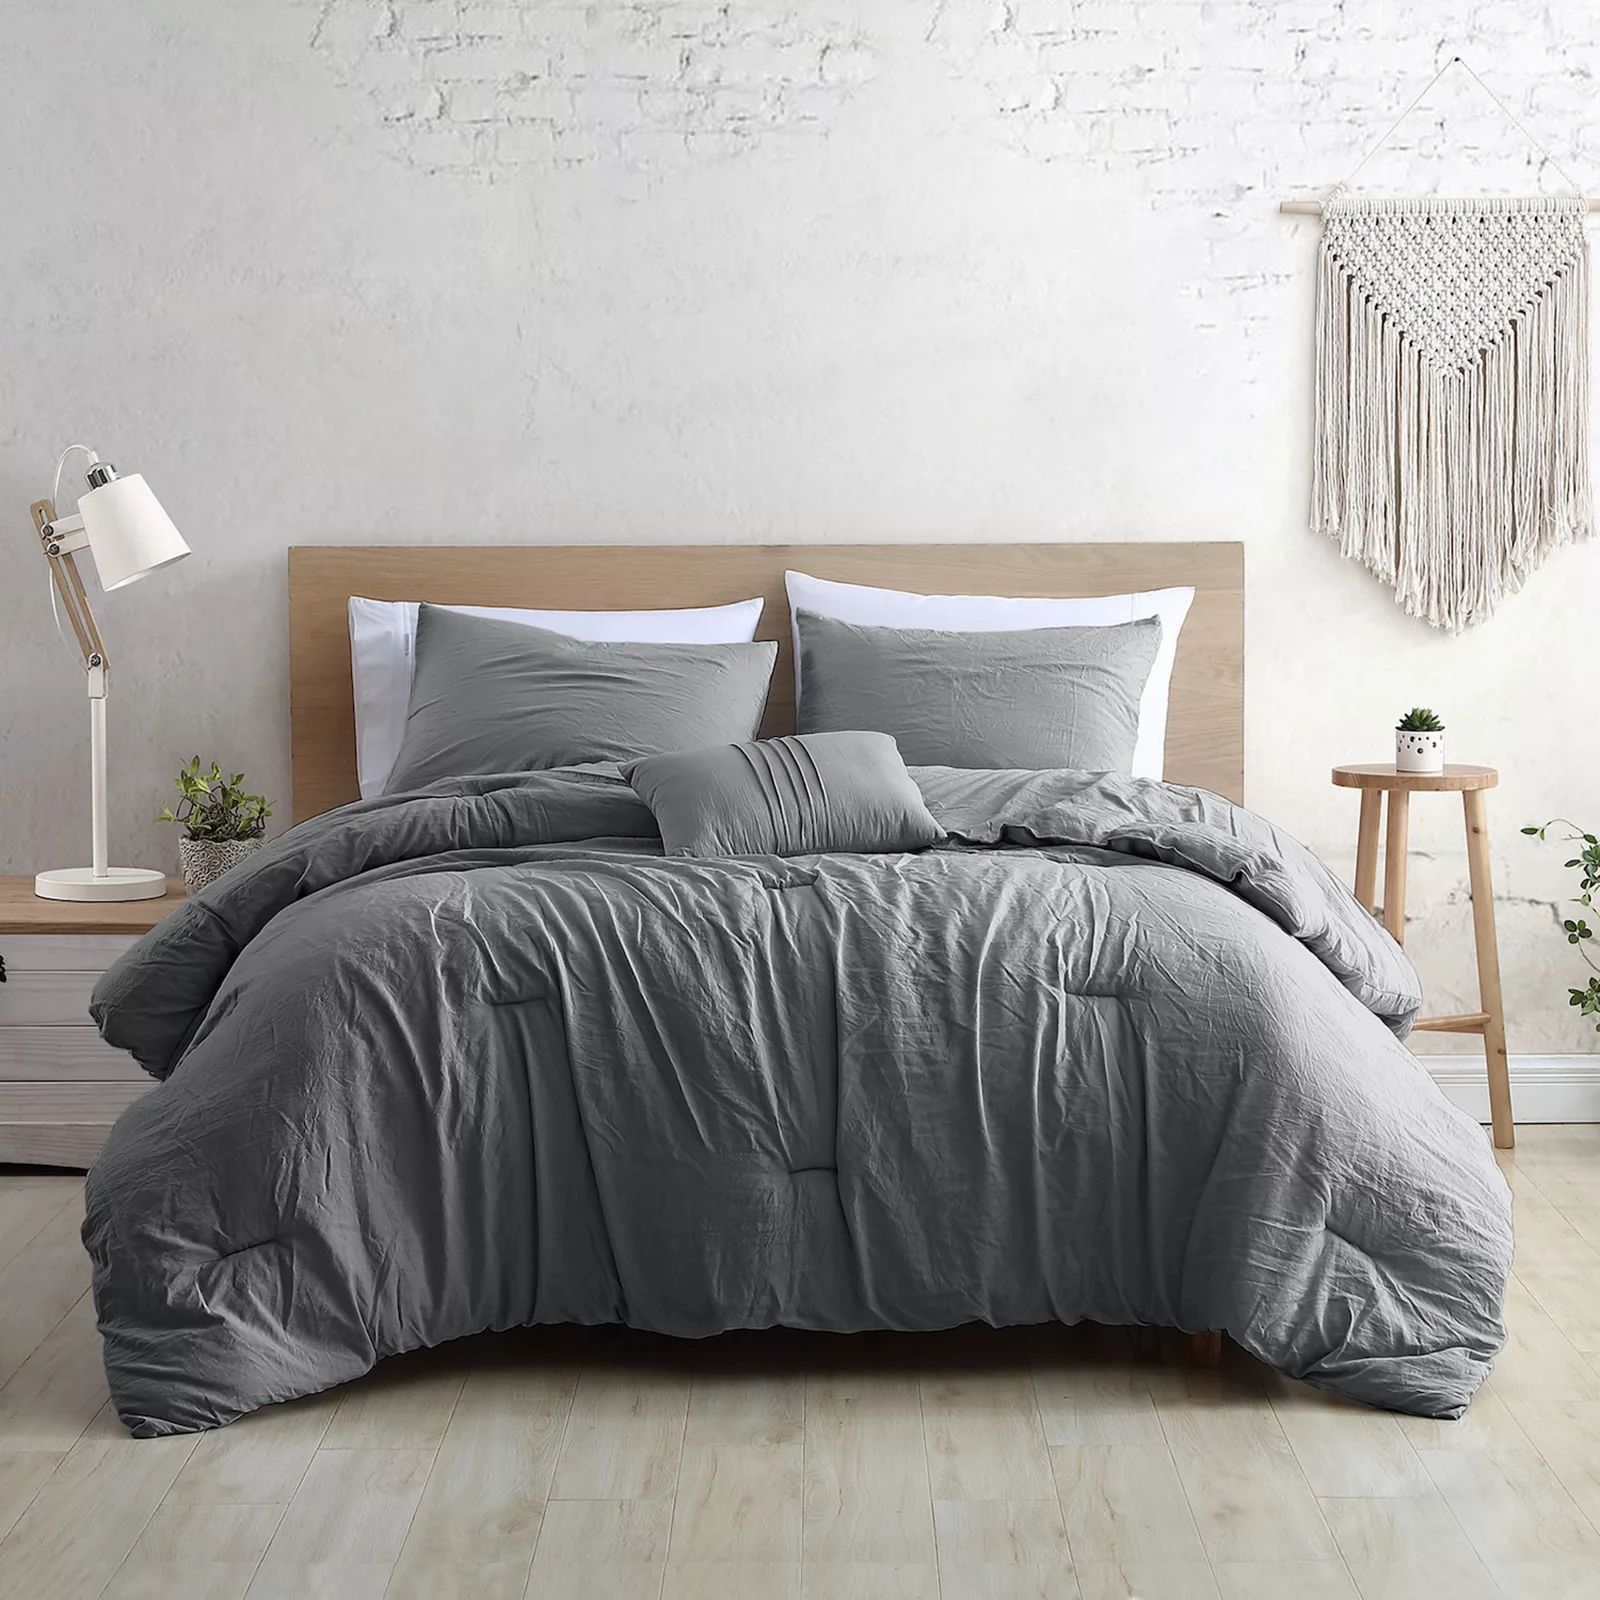 Modern Threads Beck Comforter Set with Coordinating Throw Pillow, Grey, Queen | Kohl's